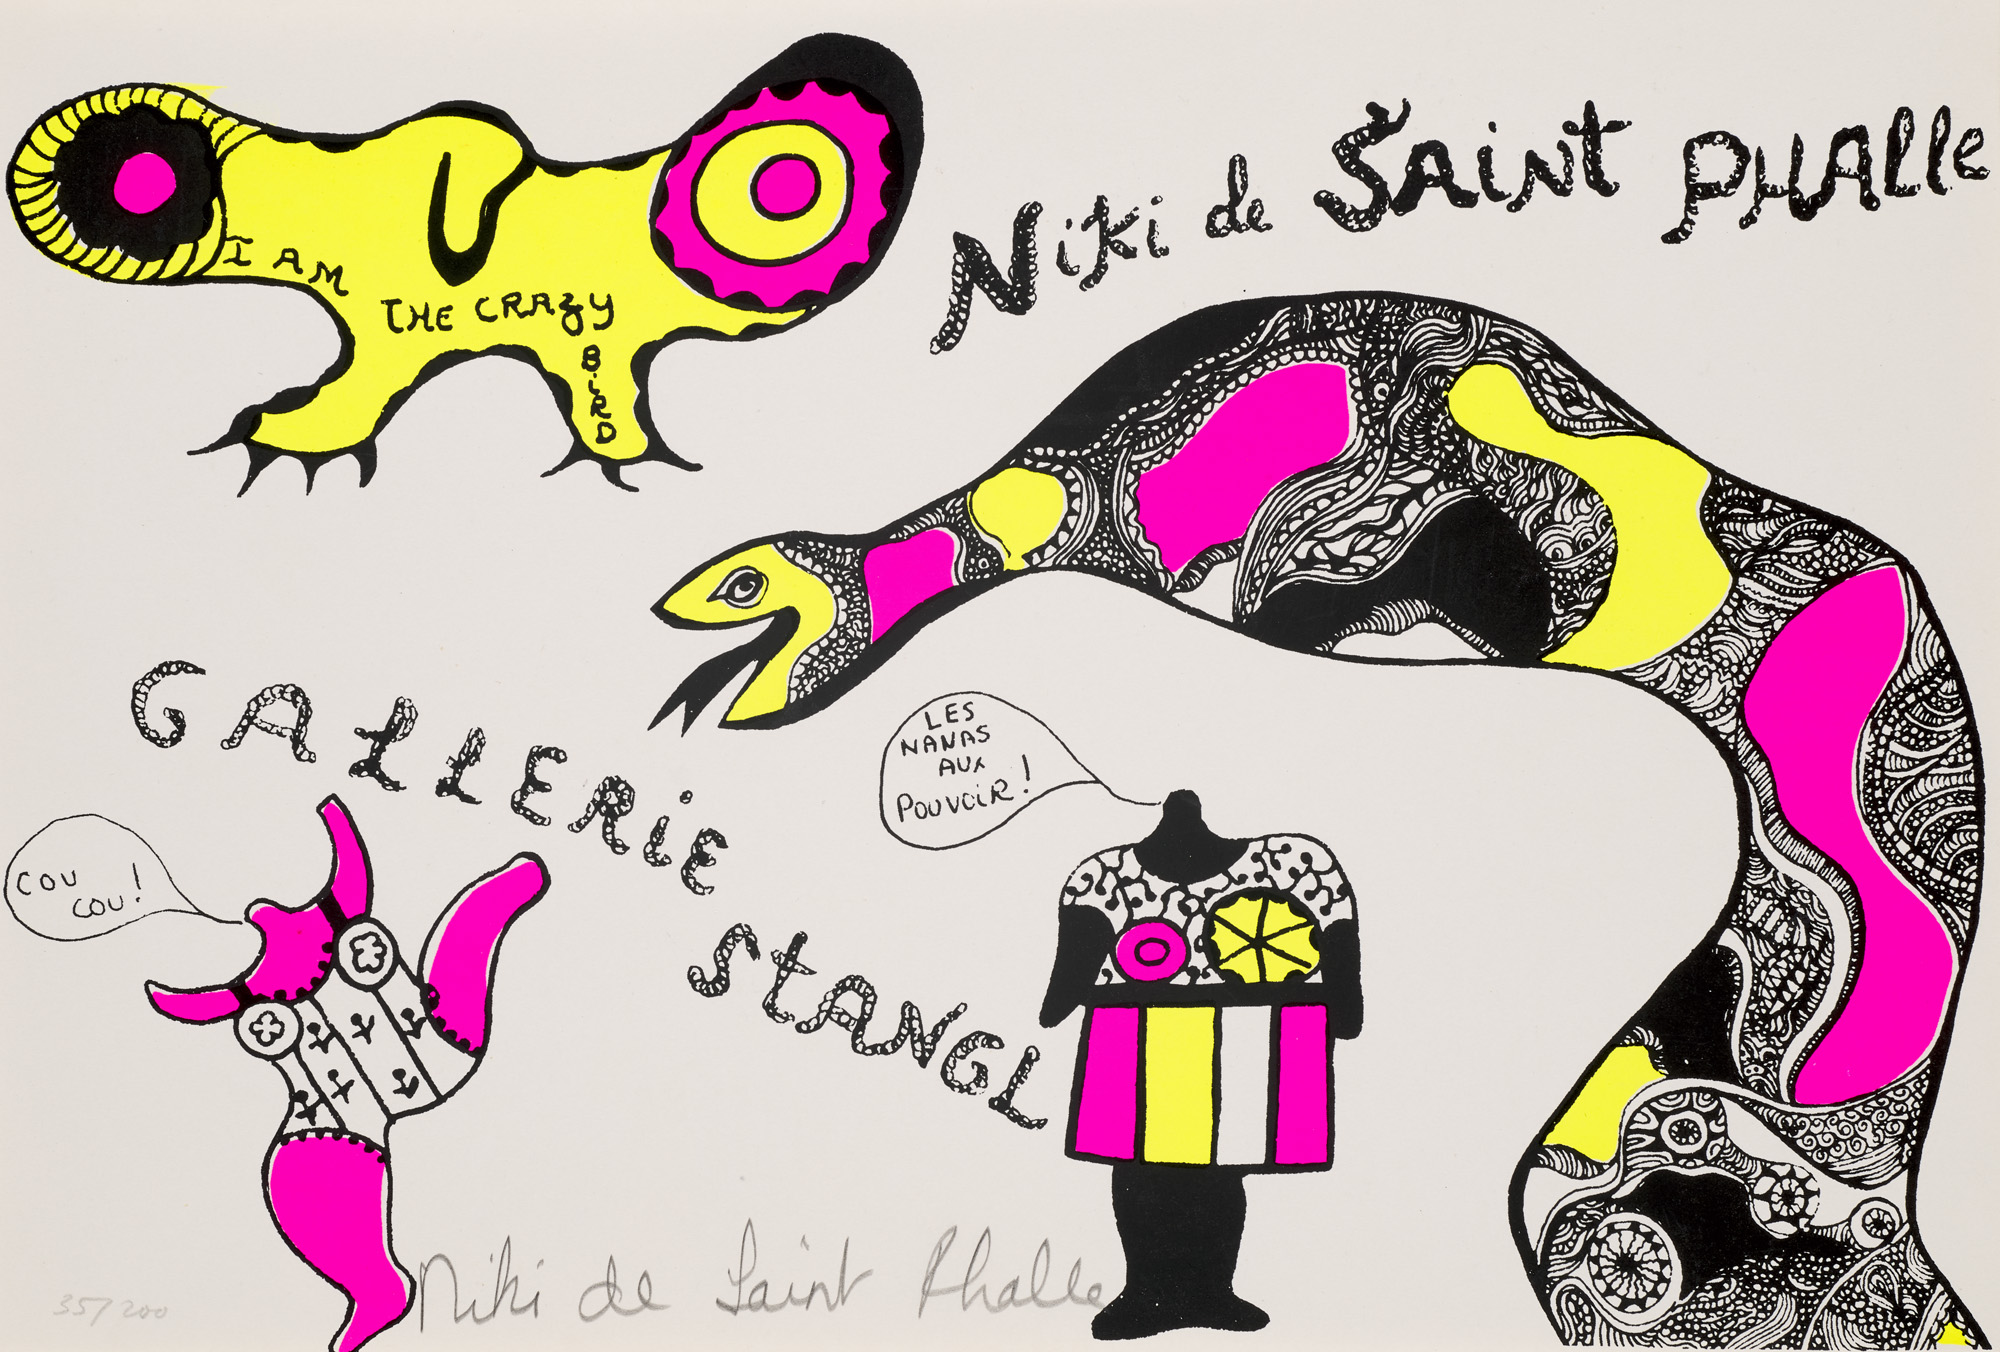 Niki de Saint Phalle. (1930